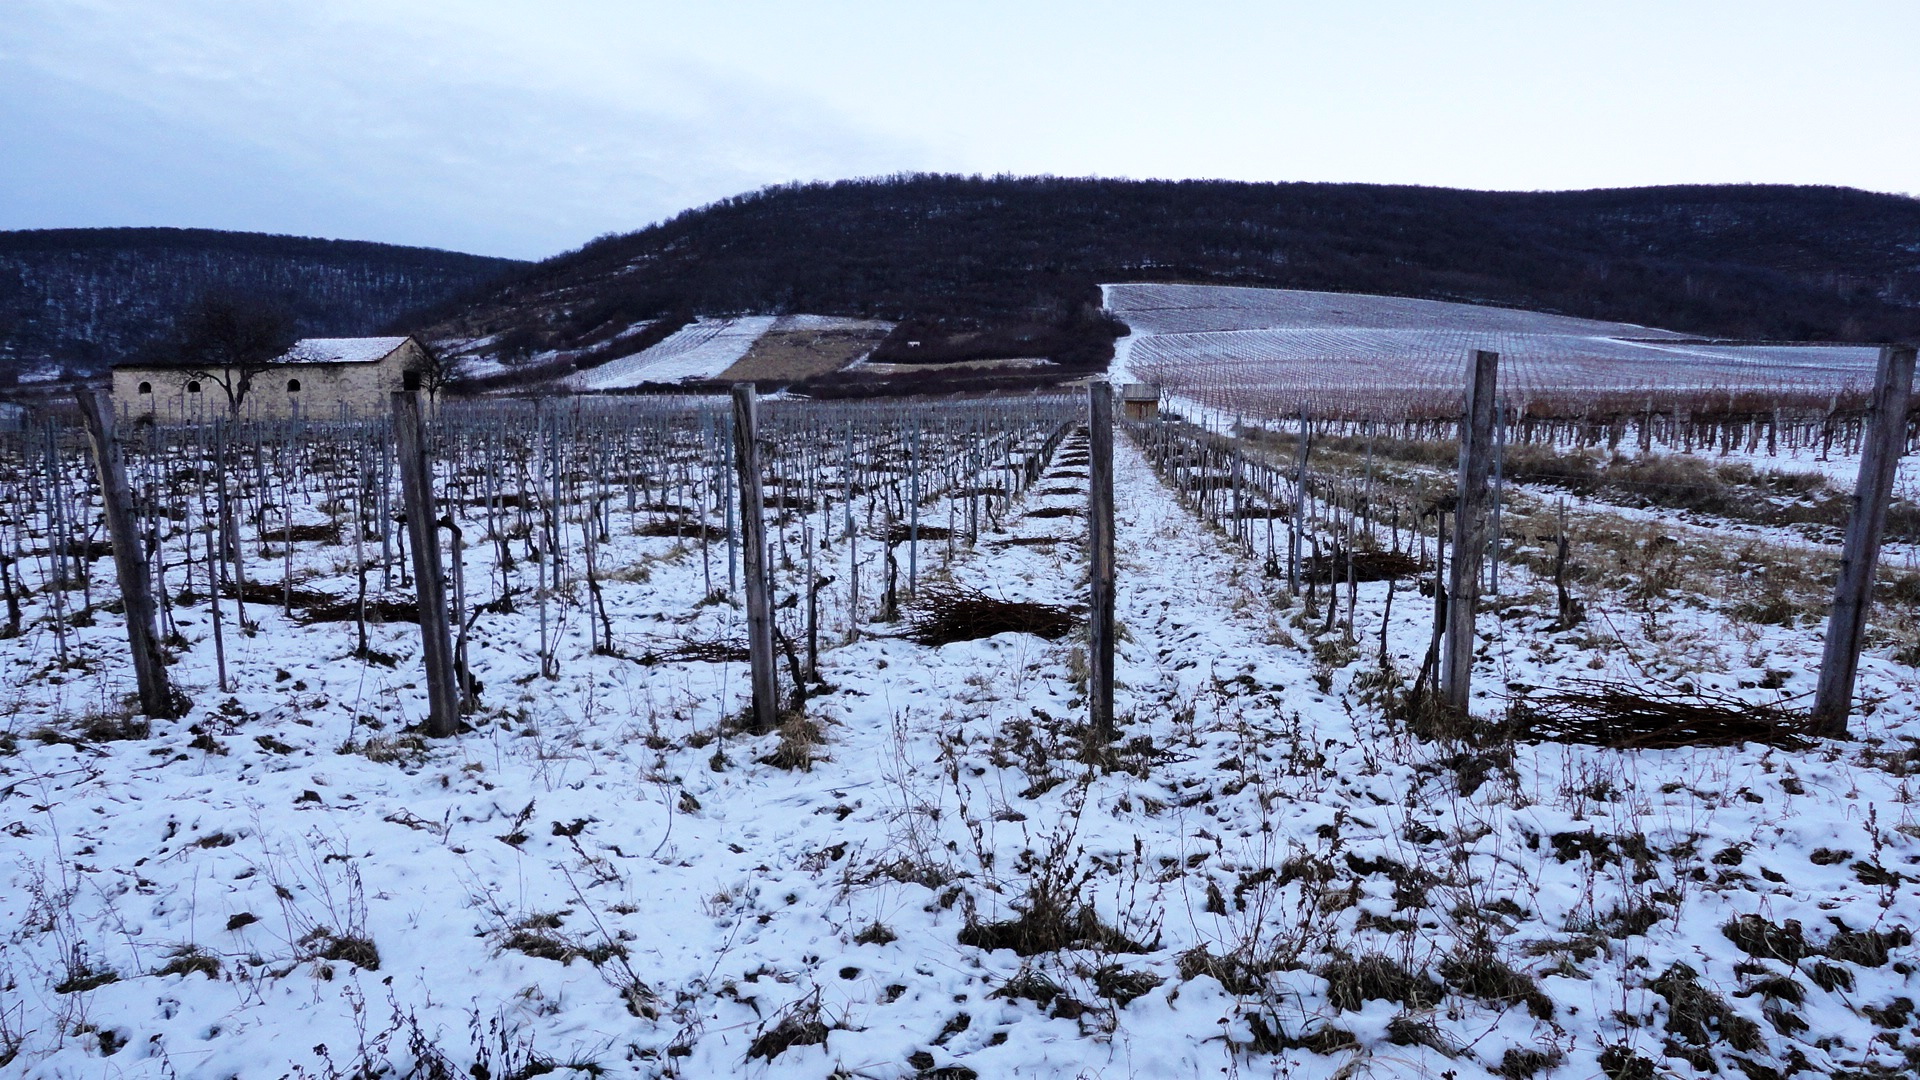 Tokaji vineyards in the winter. Photo by Stetson Robbins.